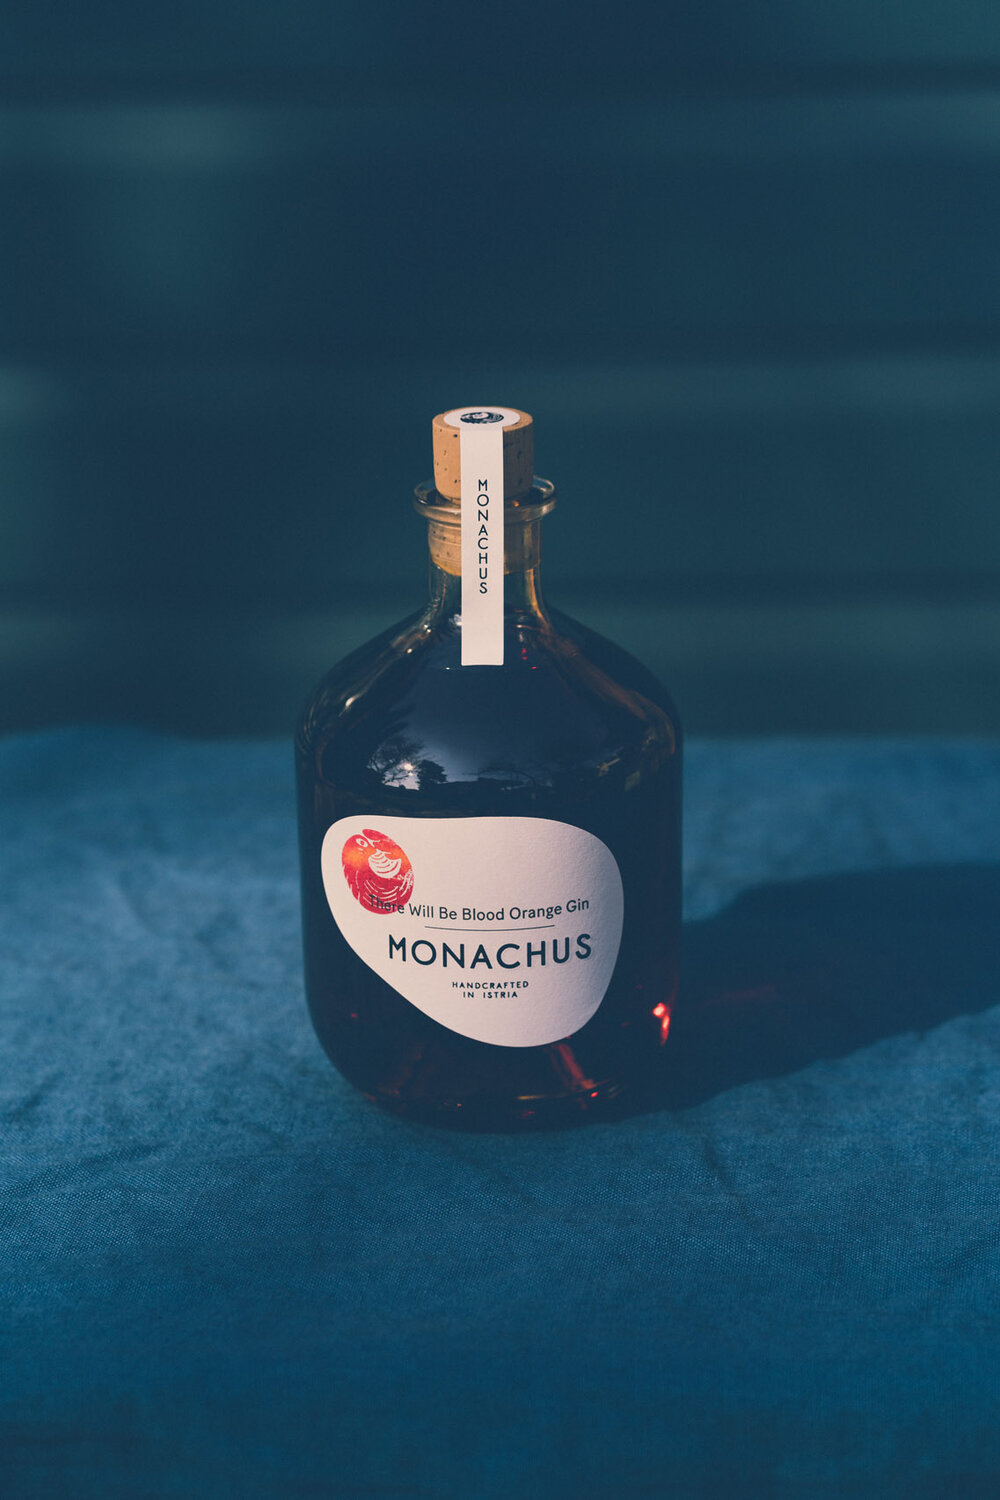 Monachus — Blood There Orange Will 0.5L Gin Be